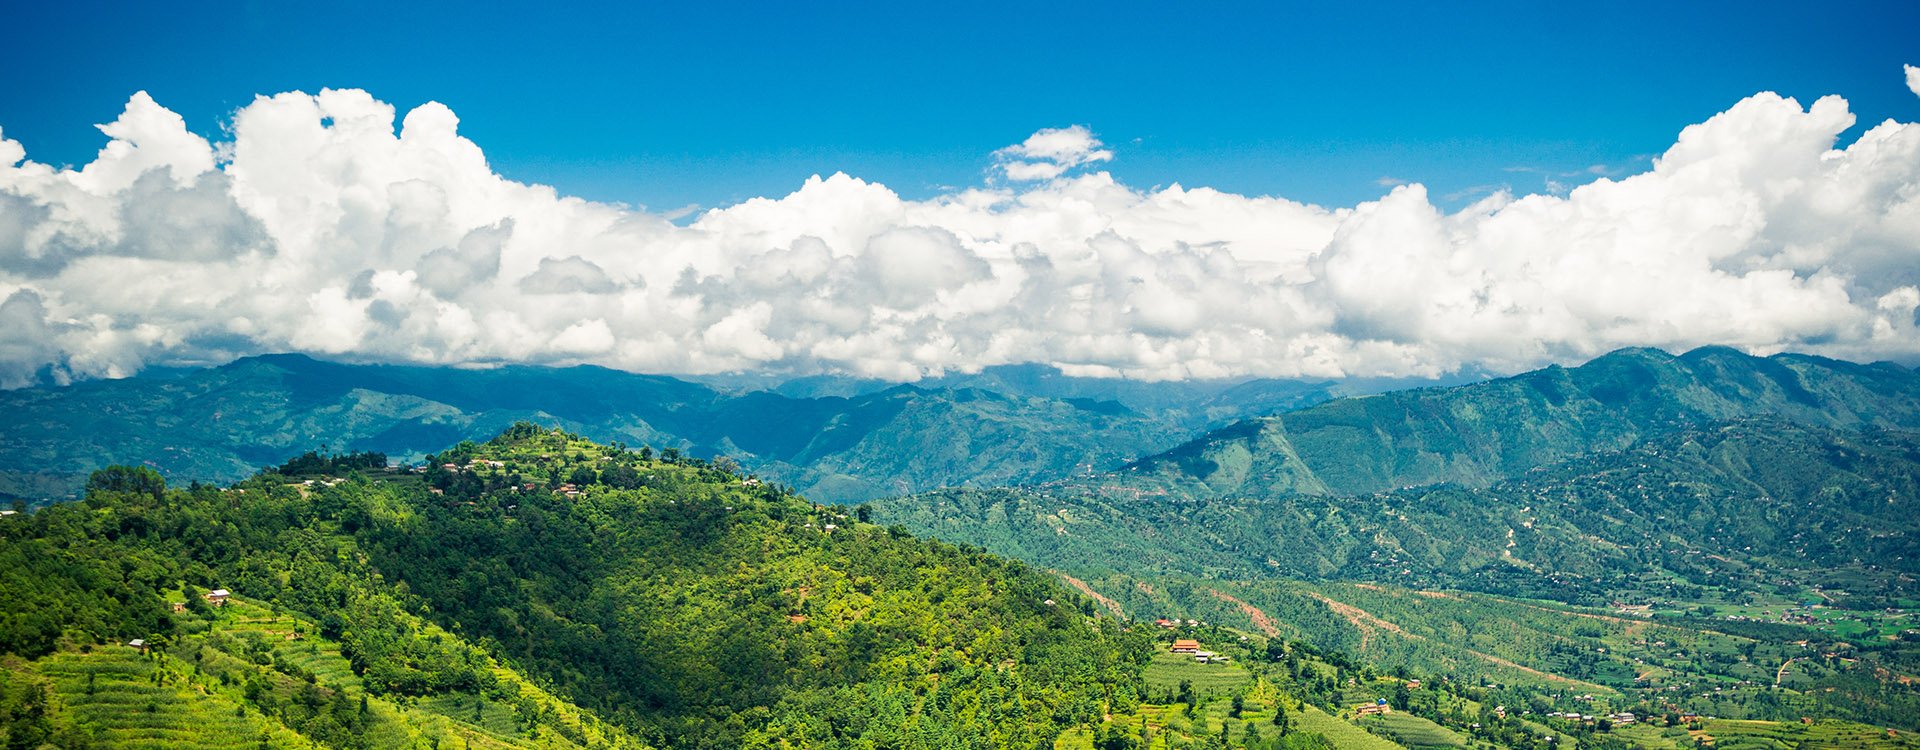 Valley of Kathmandu, Nepal during summer